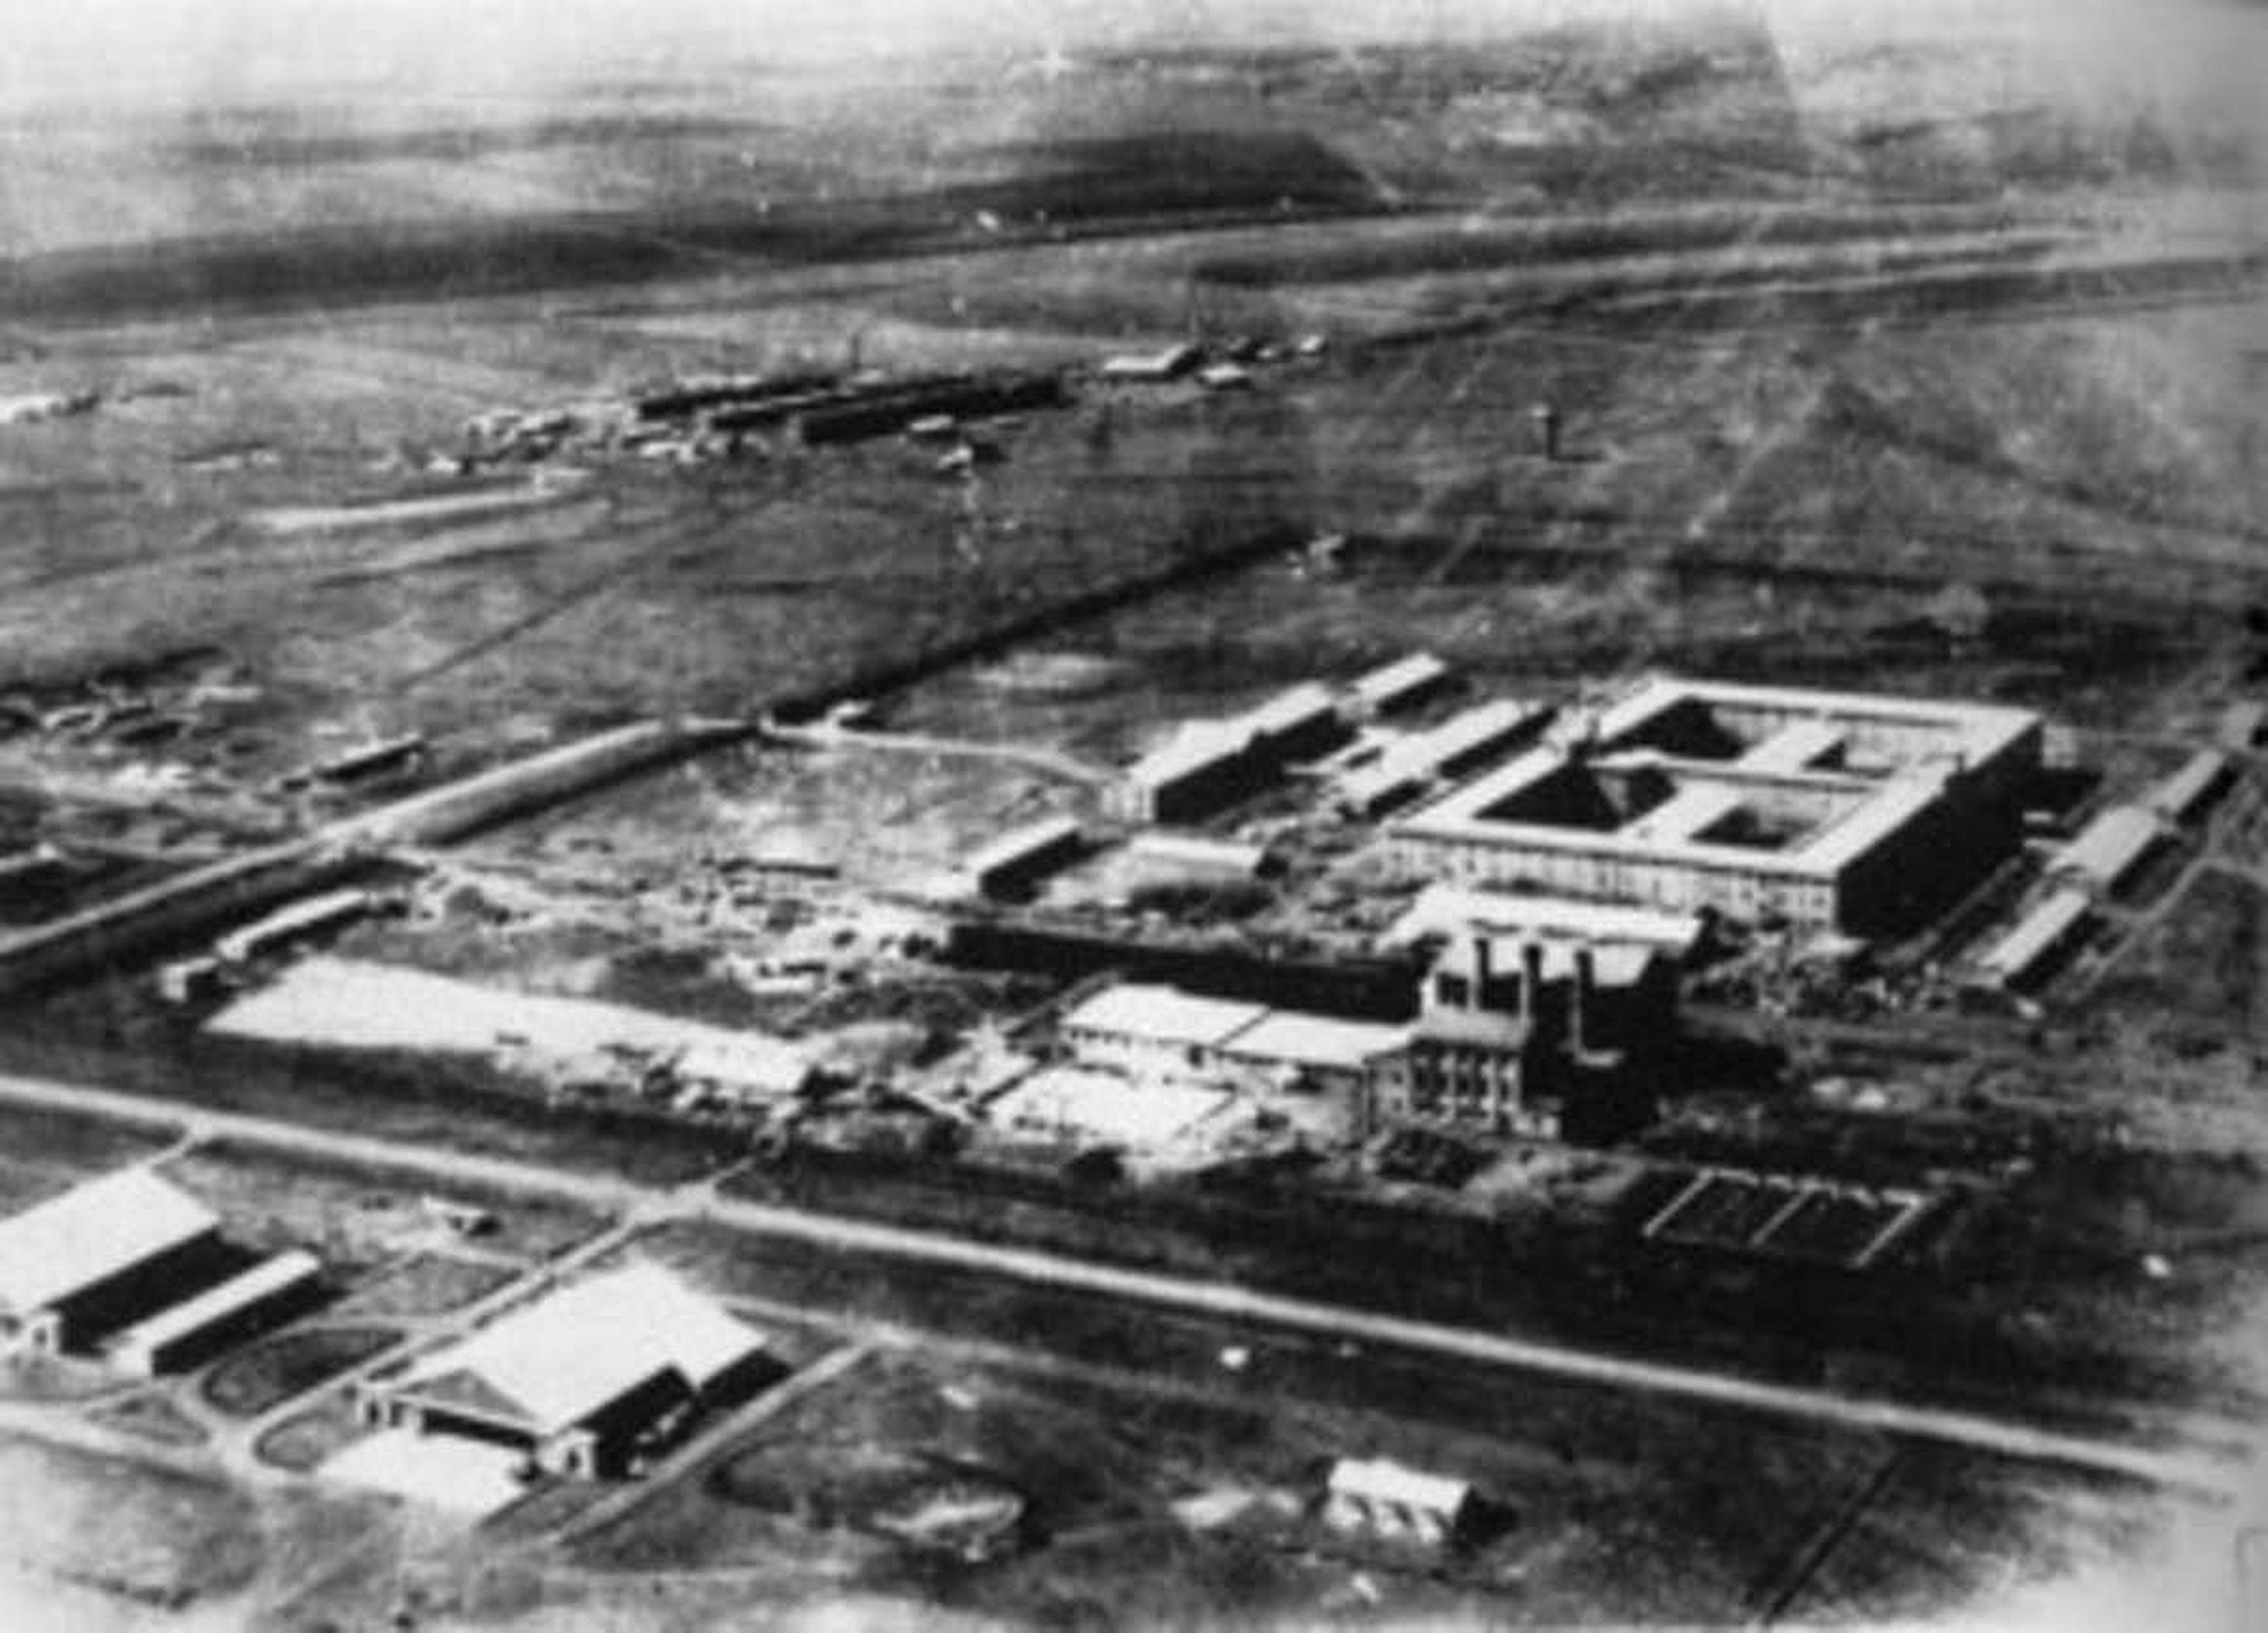 Vista aérea de la Unidad 731 en Pingfan, China.